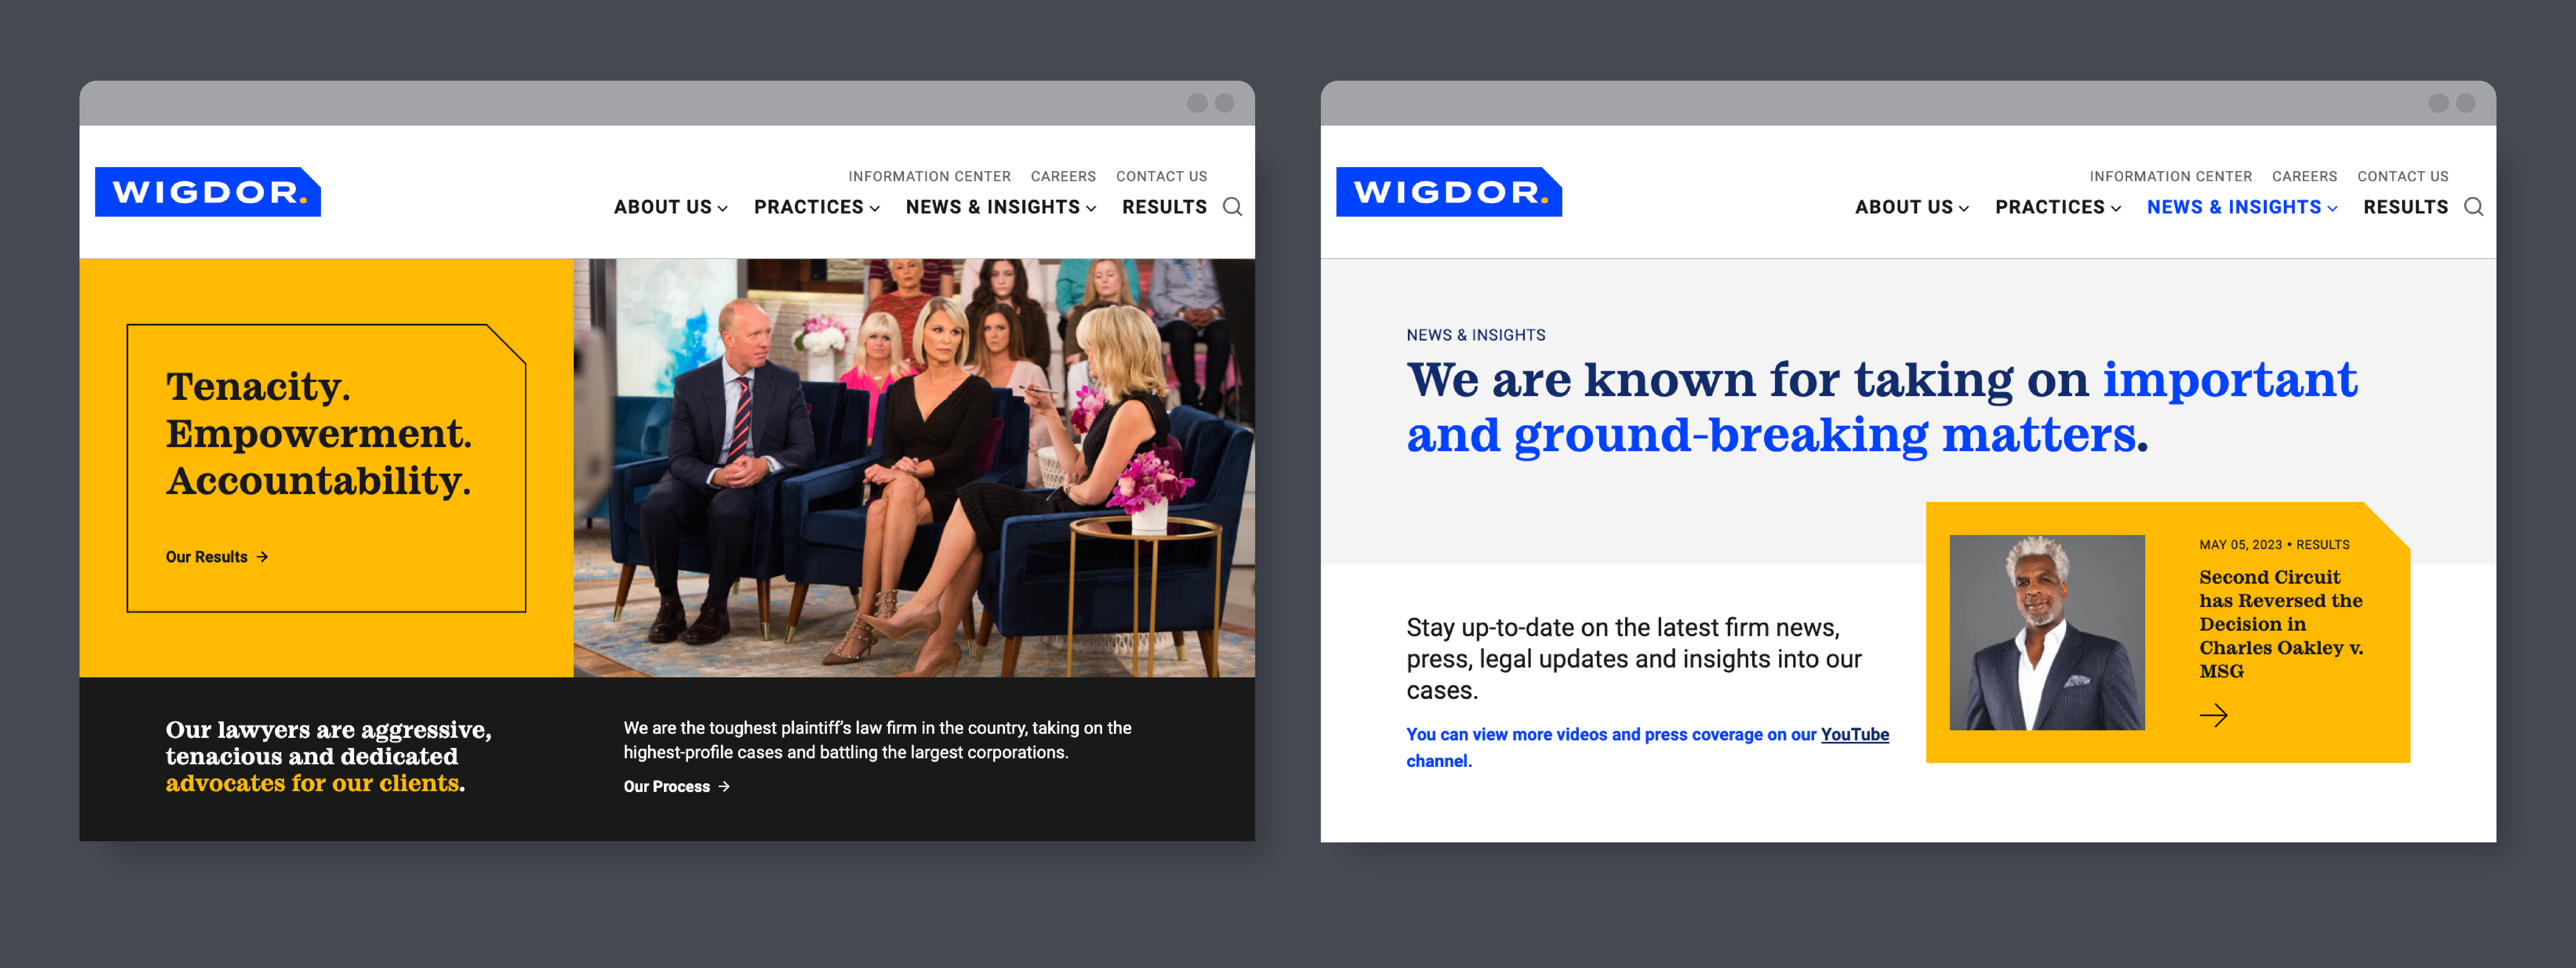 Two screenshots of the Wigdor website